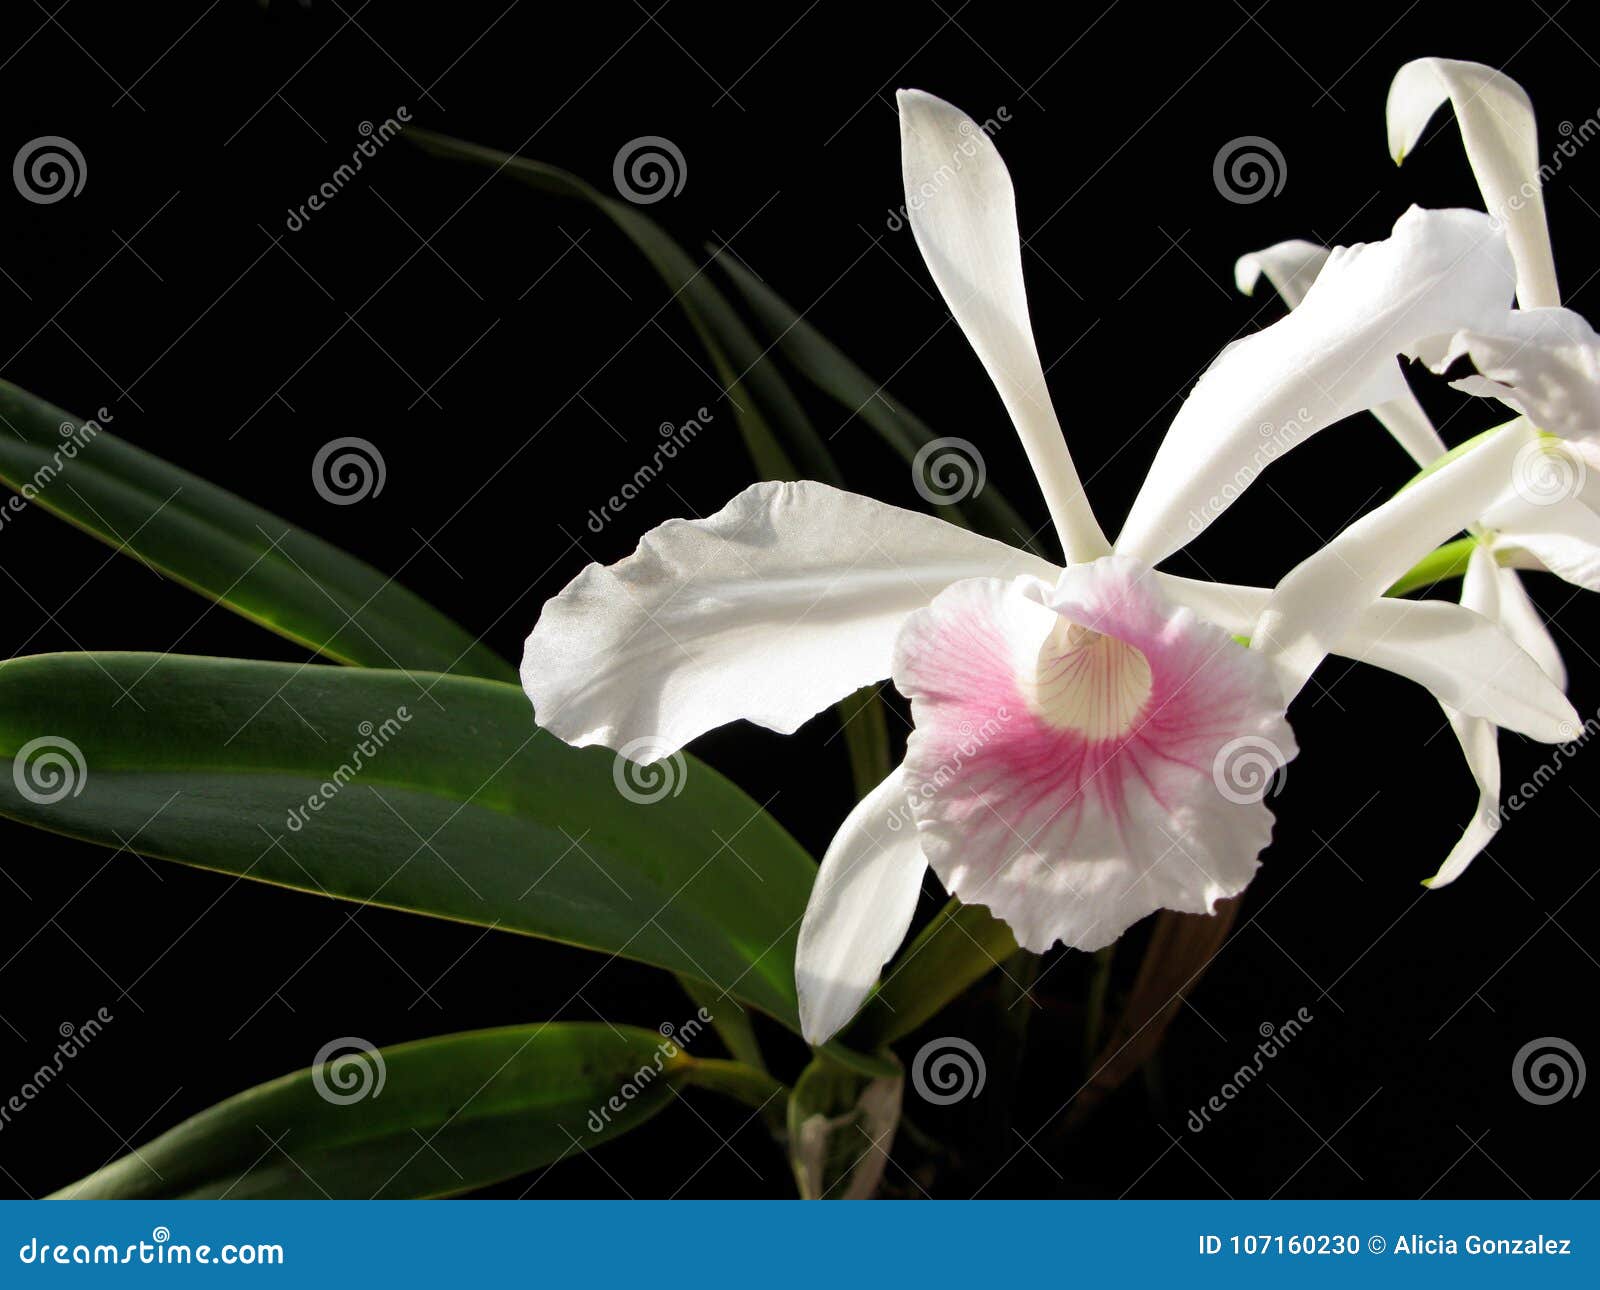 beauty orchid laelia purpurata carnea